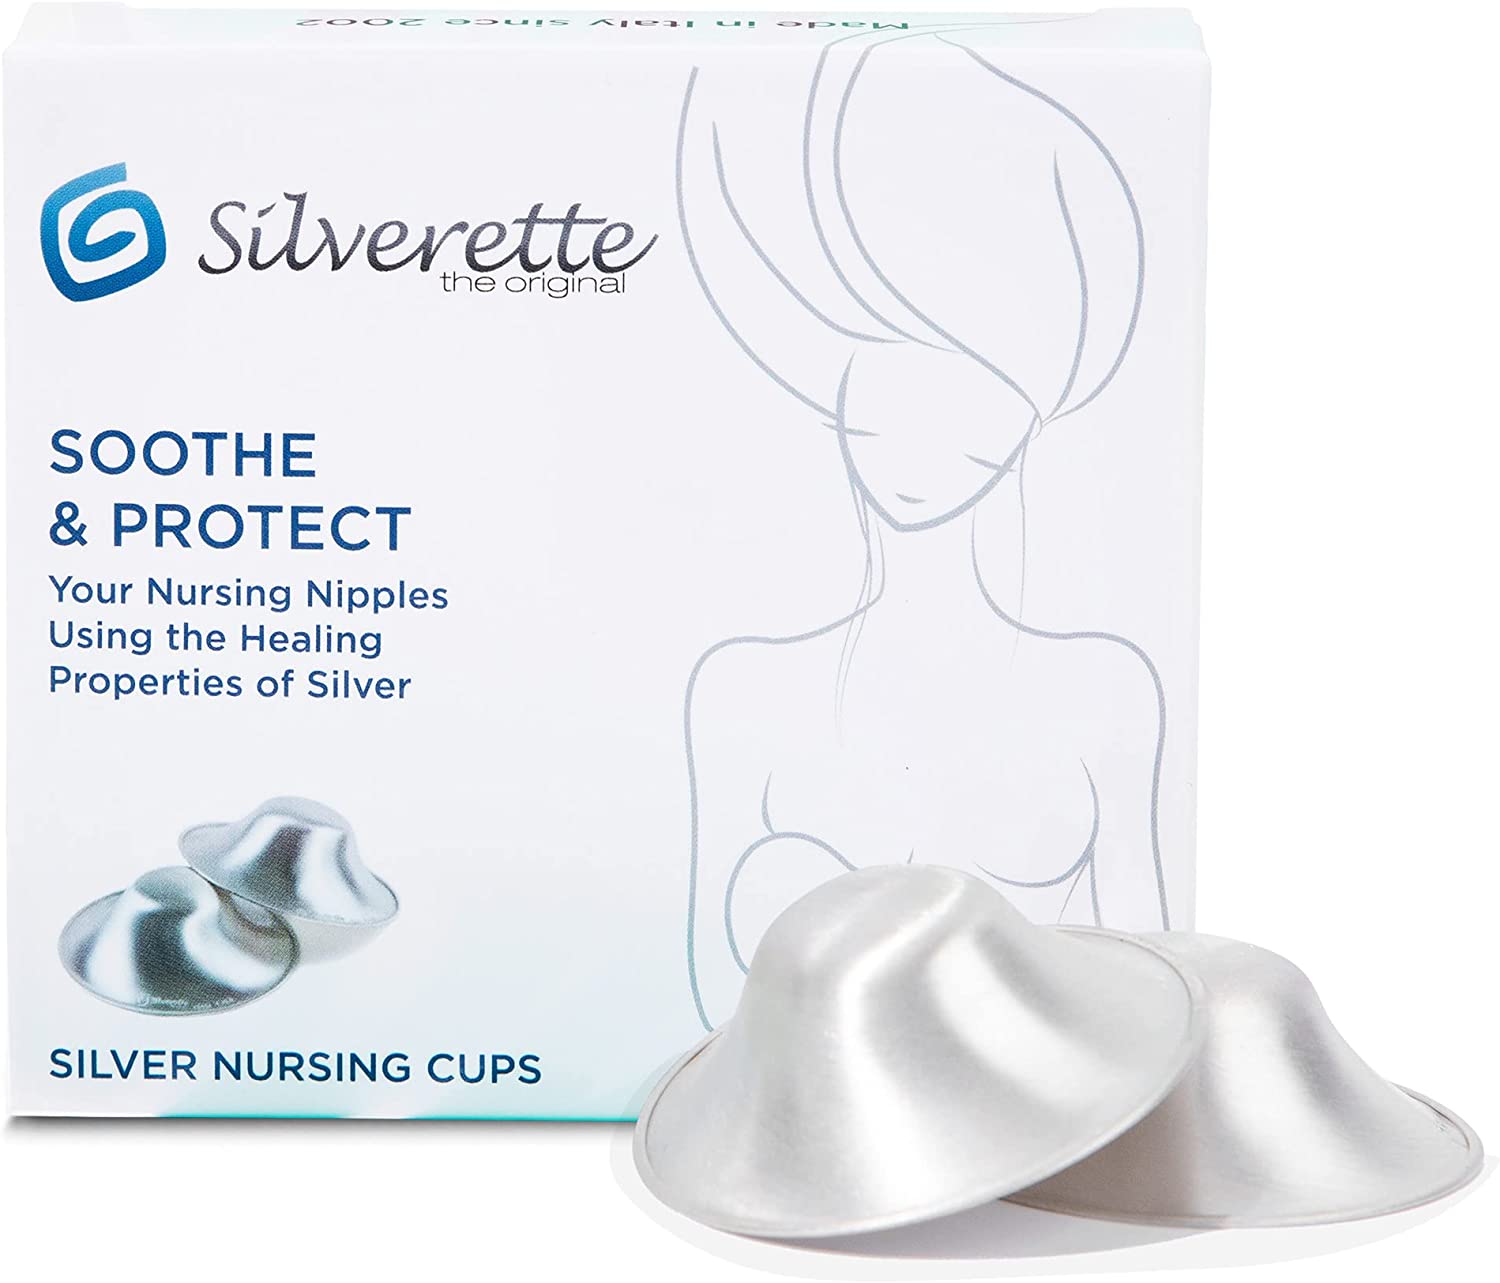 [SILVERETTE] - The Original Silver Nursing Cups